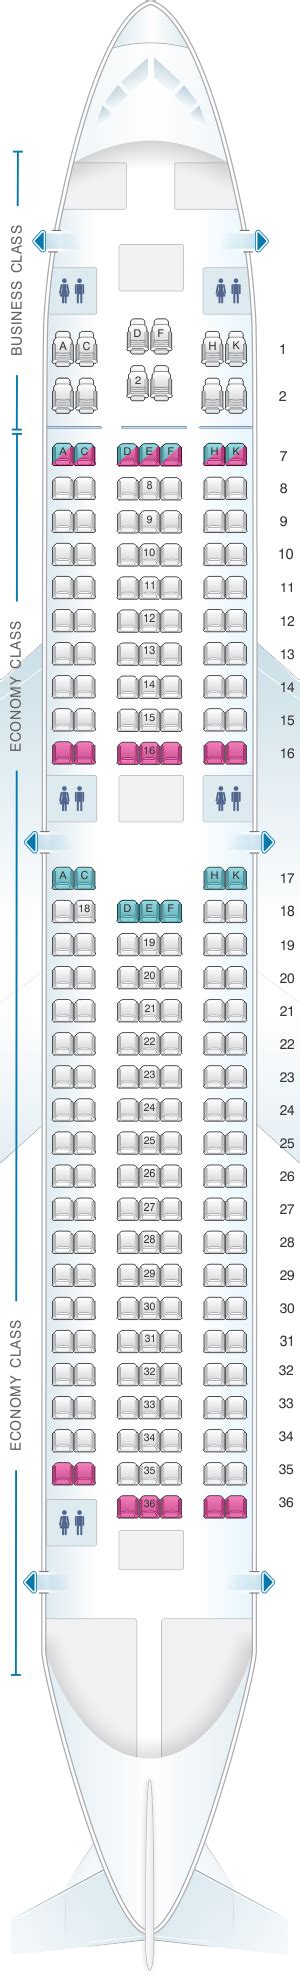 Seat Map Boeing Aer Lingus Best Seats In Plane Sexiz Pix